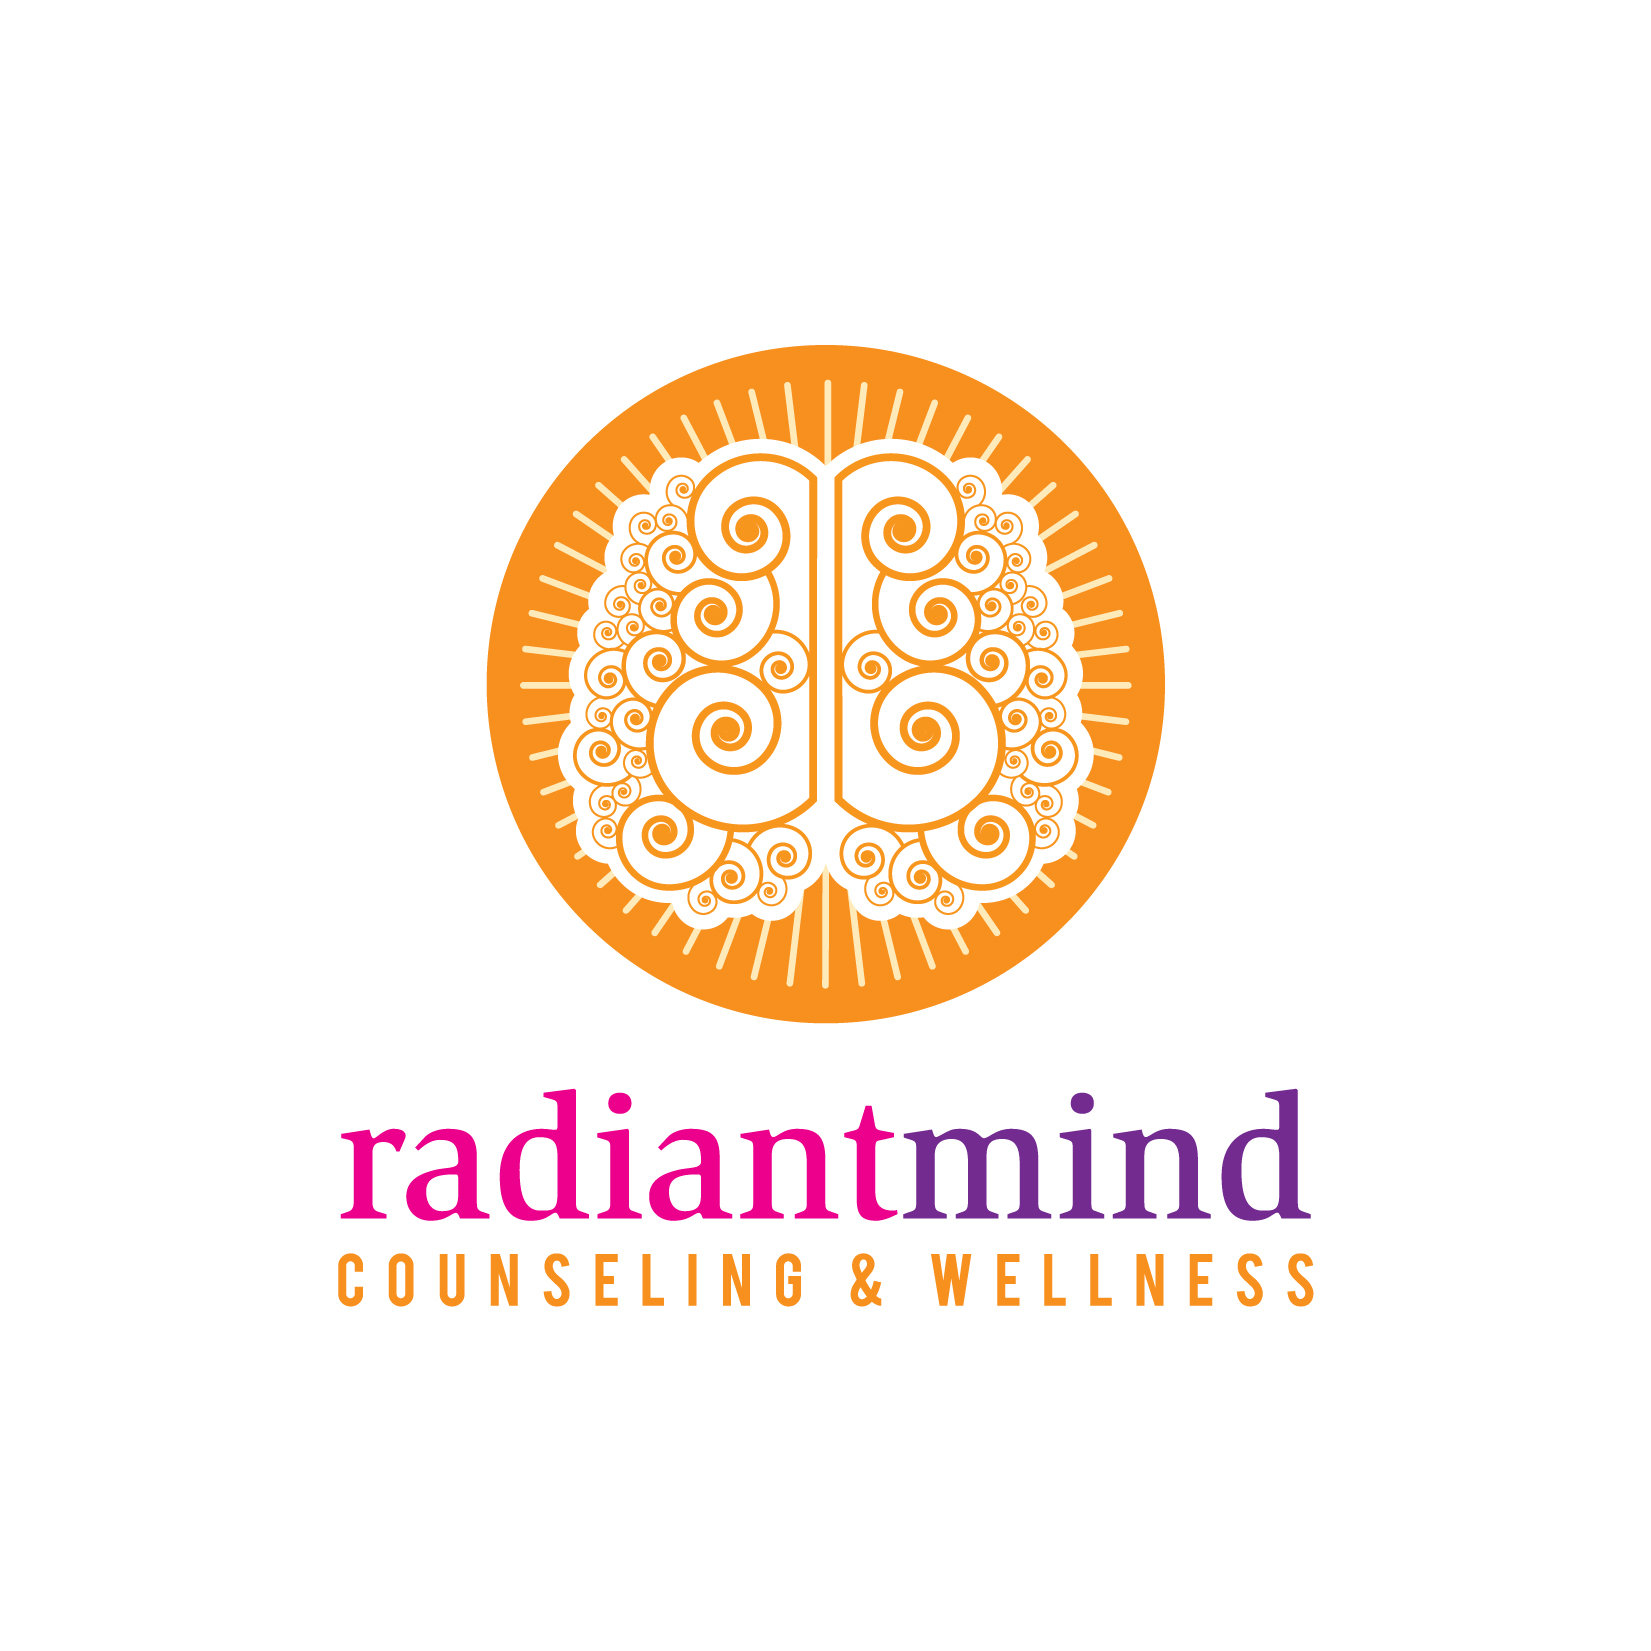 RadiiantMind Counseling & Wellness Logo